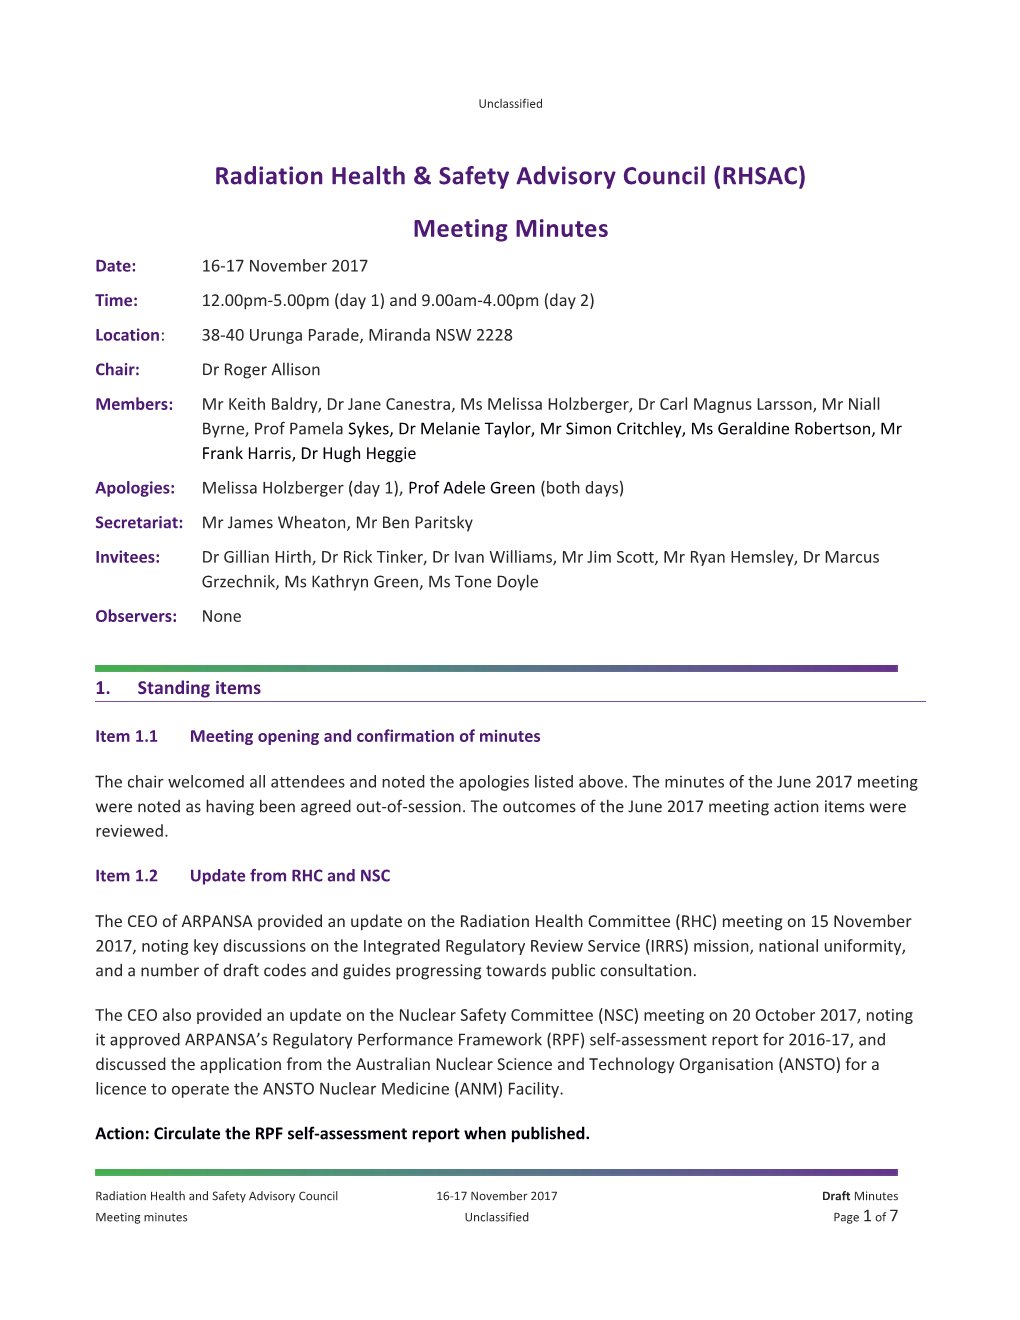 Radiation Health & Safety Advisory Council (RHSAC)